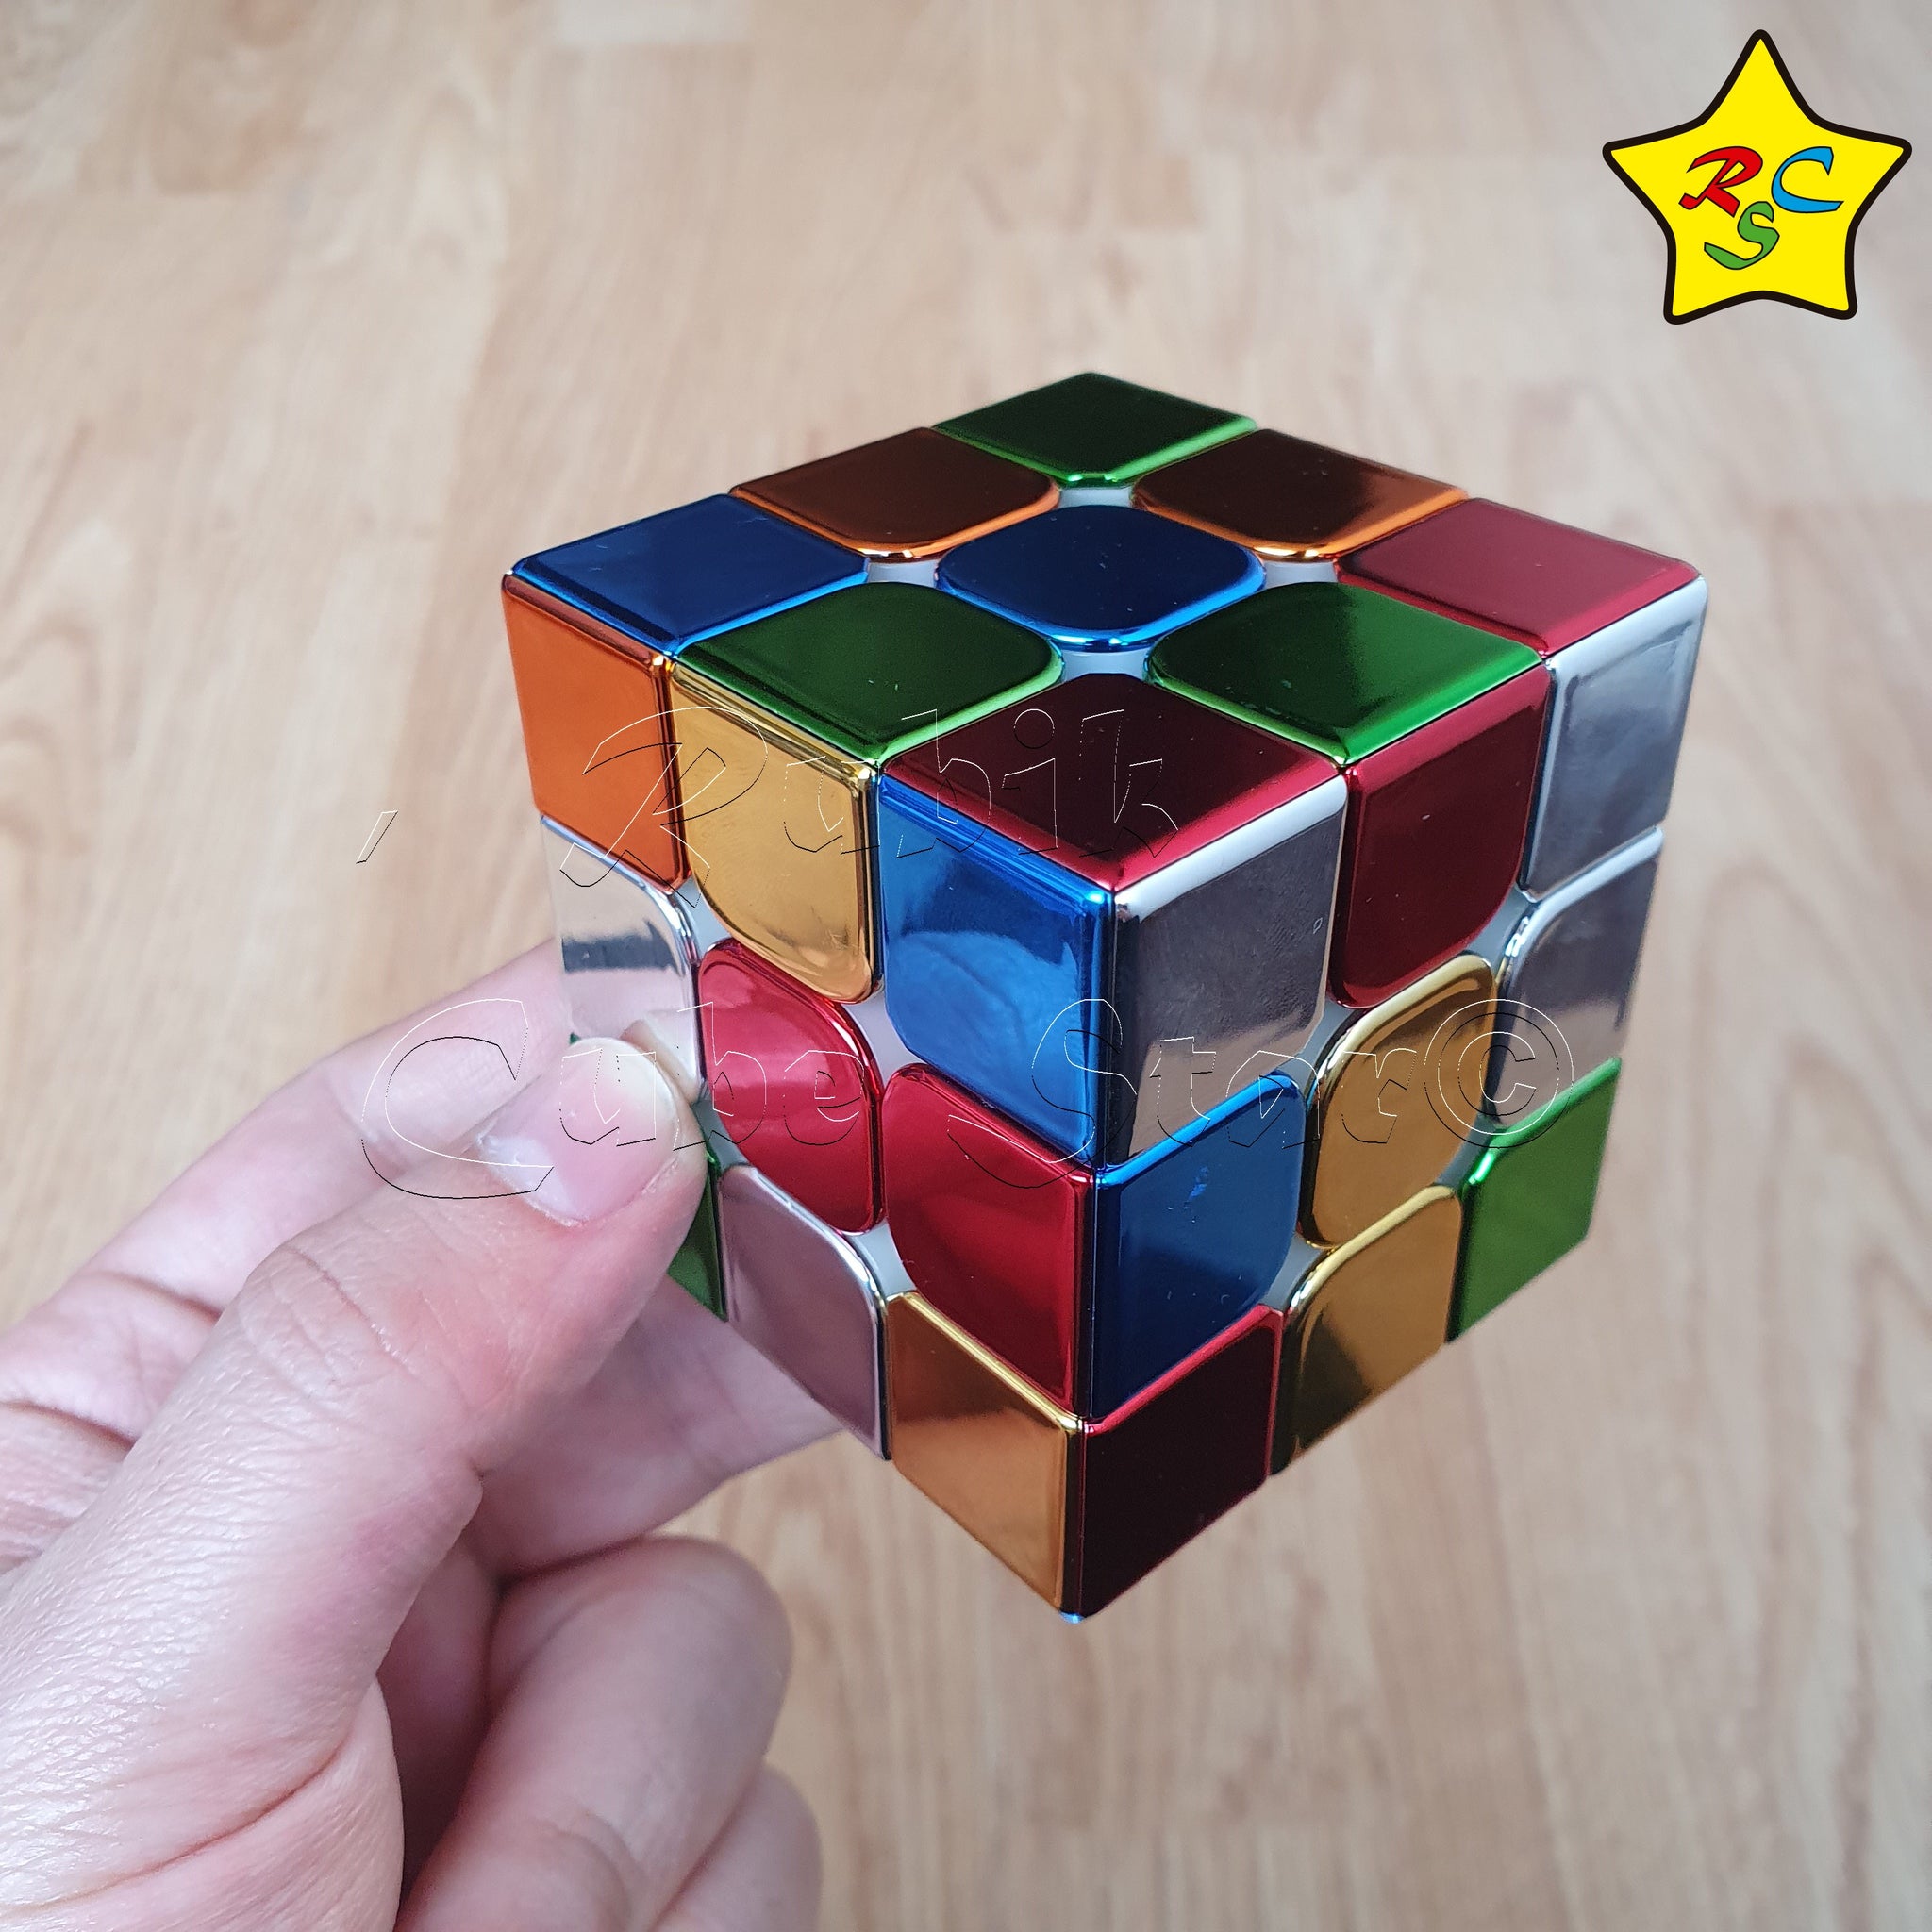 Fotos De Cubos De Rubik Cyclone Boys Metalico Cubo Rubik 3x3 Magnético Metalizado – Rubik Cube Star